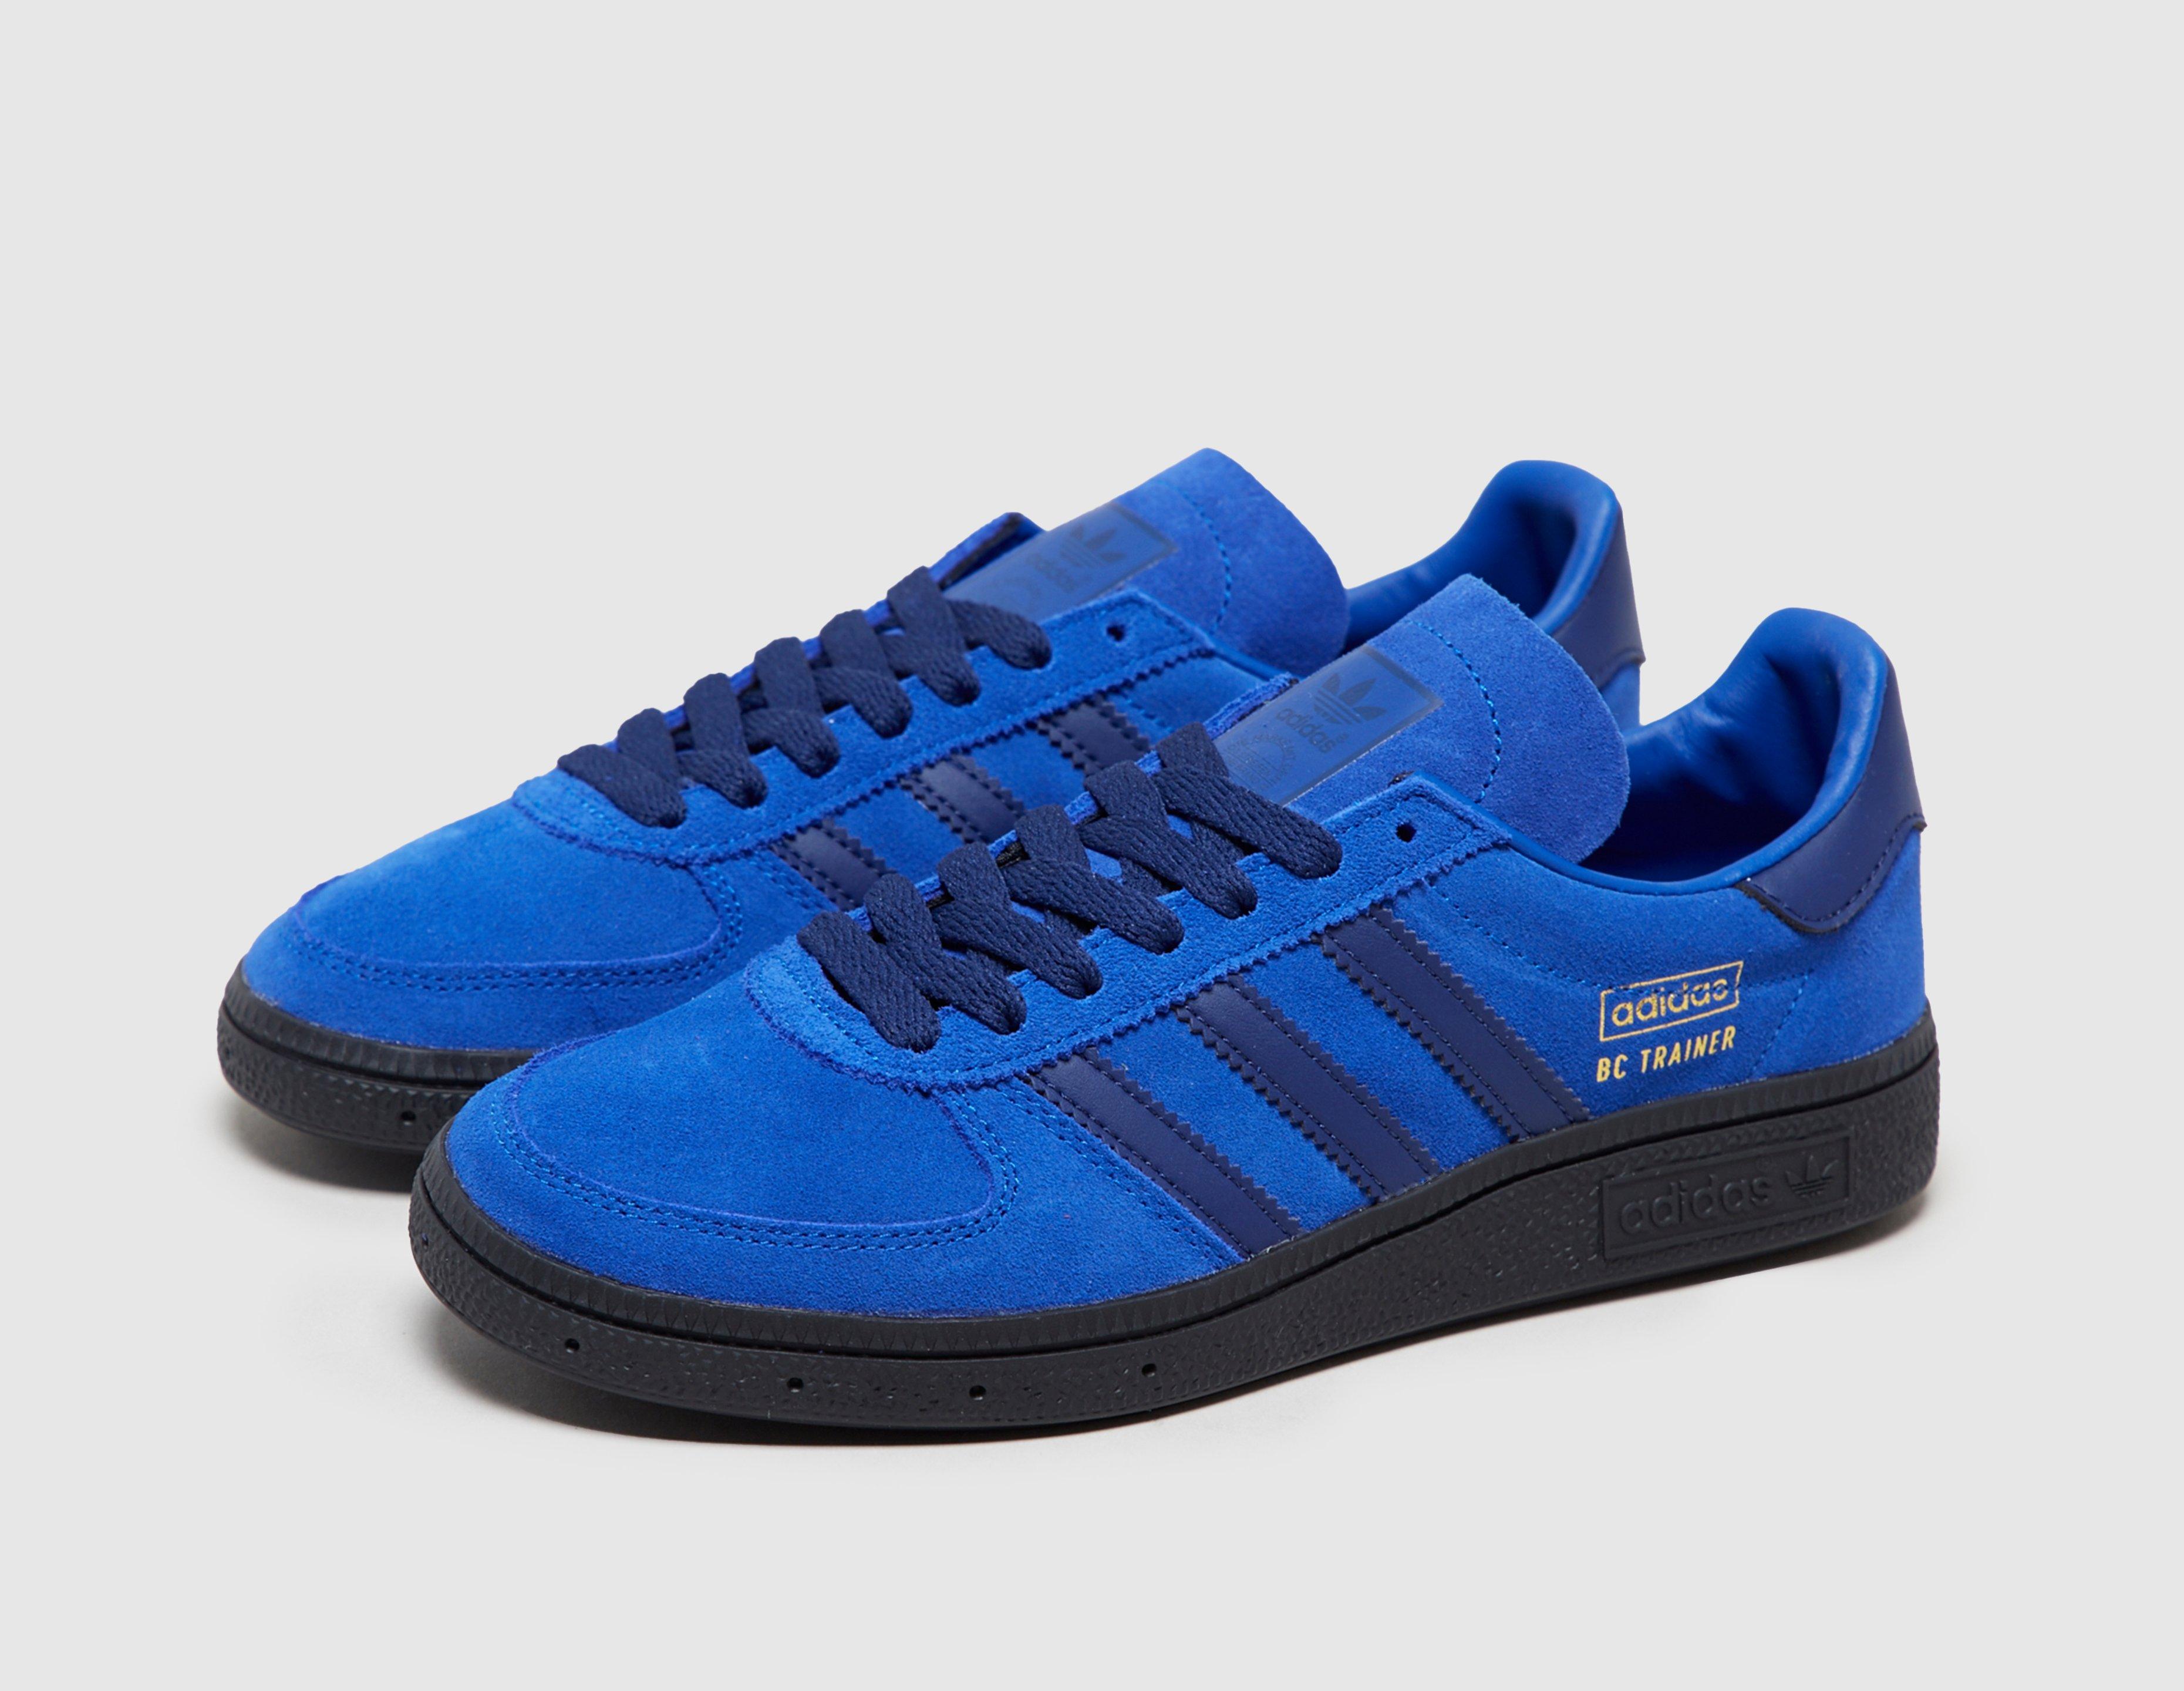 adidas bc trainer all blue